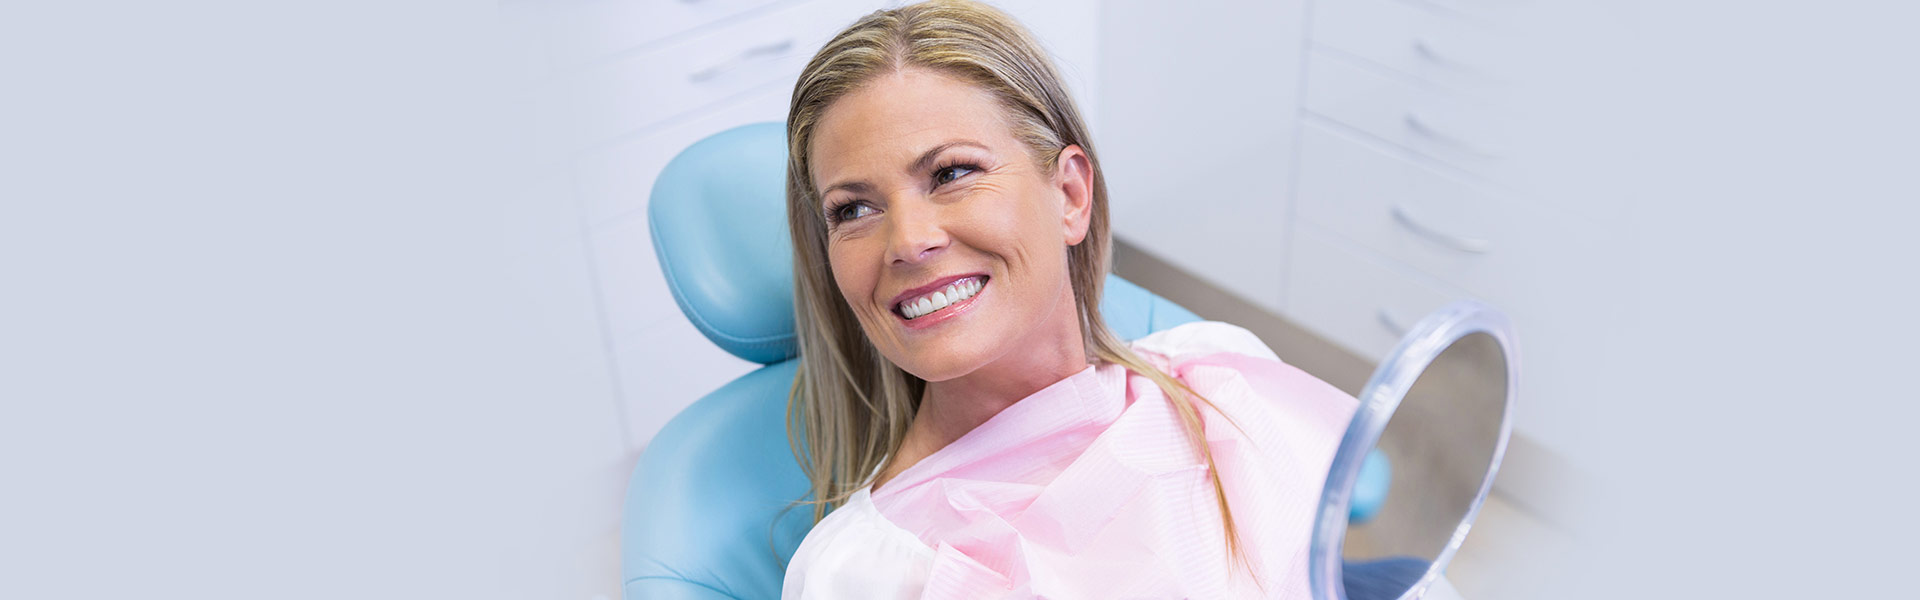 patient smiling after dental implant treatment